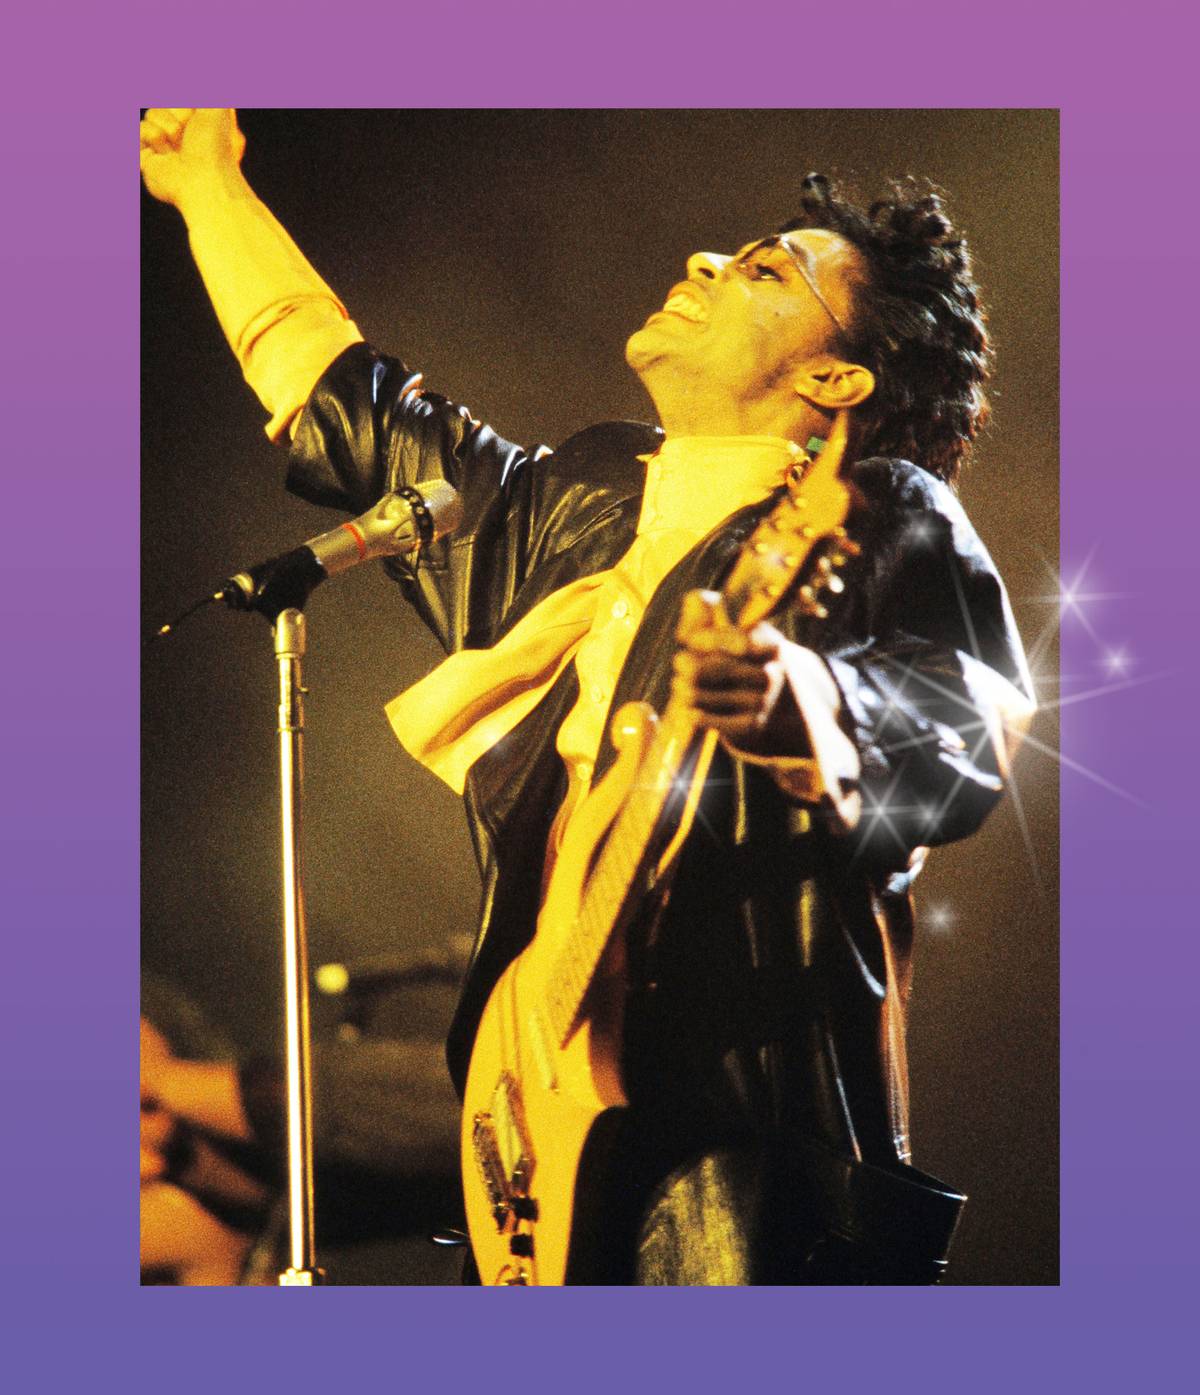 Prince performs in Paris, 1987